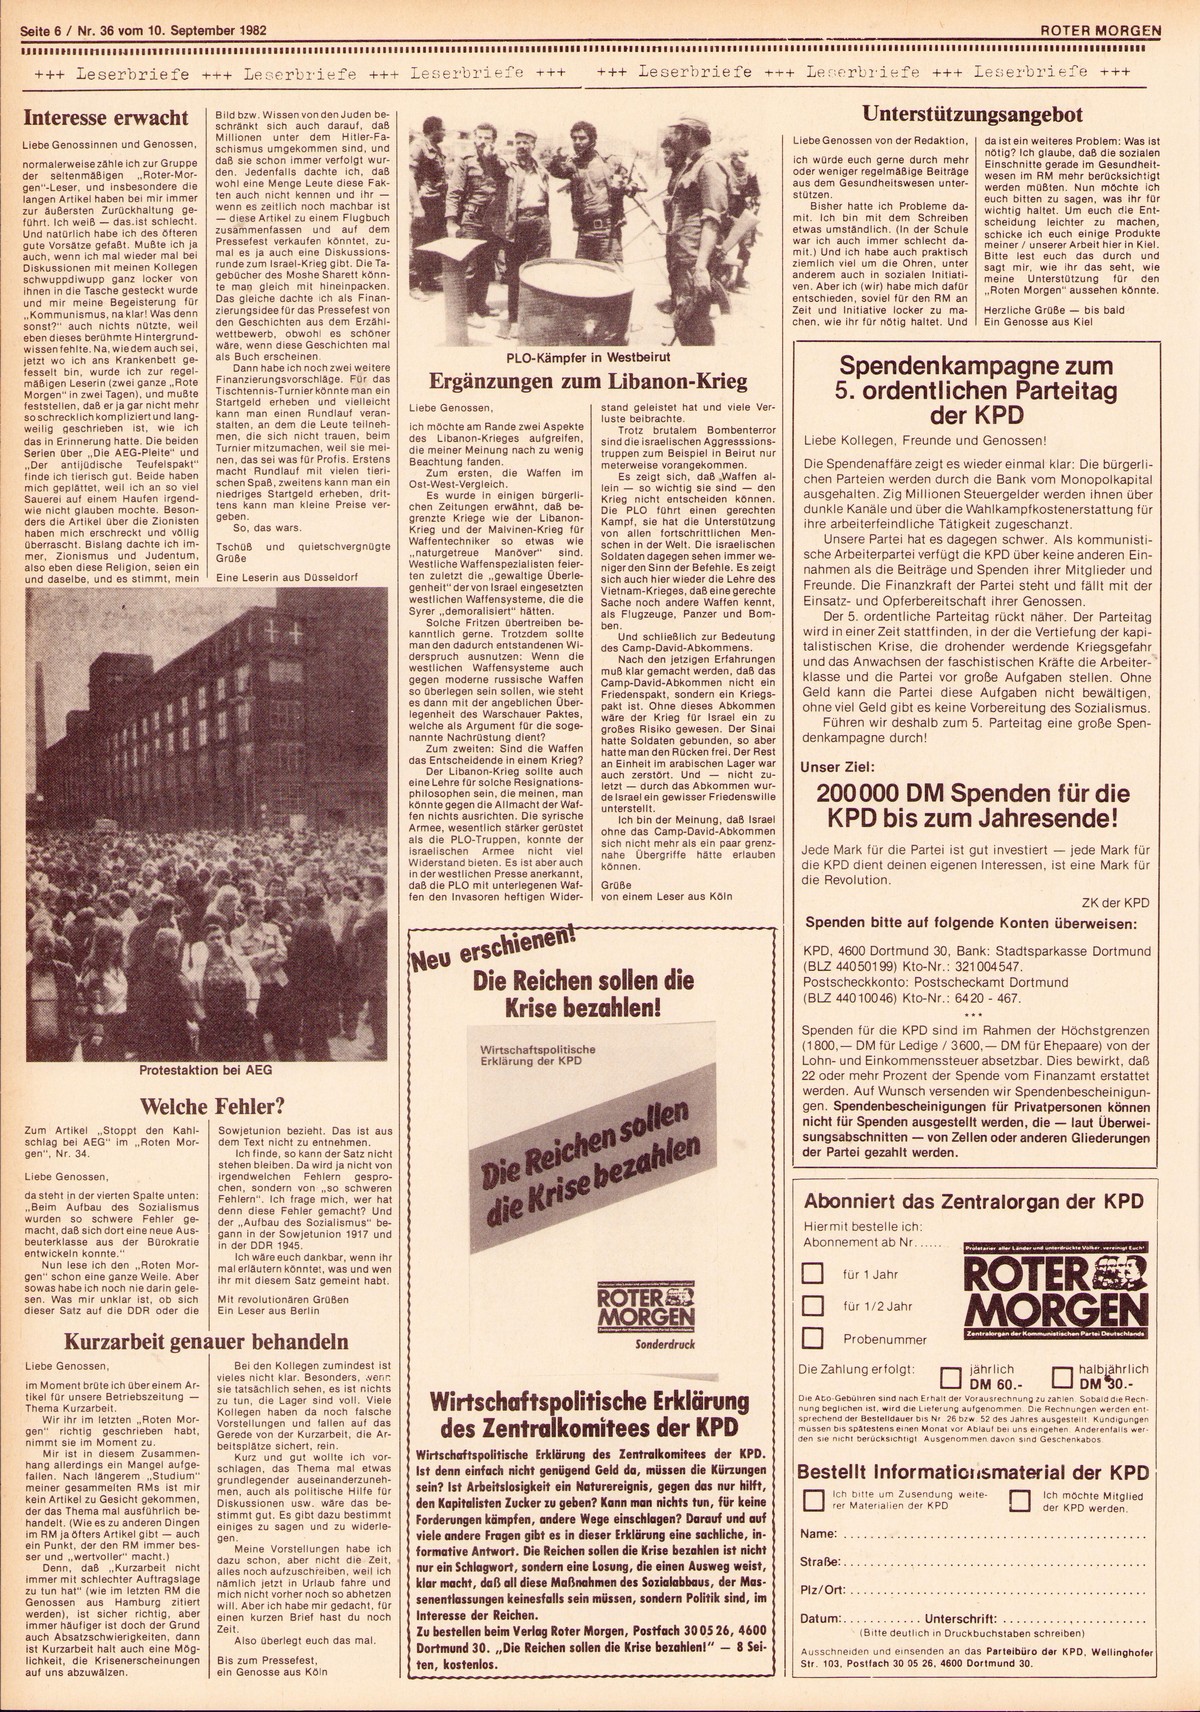 Roter Morgen, 16. Jg., 10. September 1982, Nr. 36, Seite 6